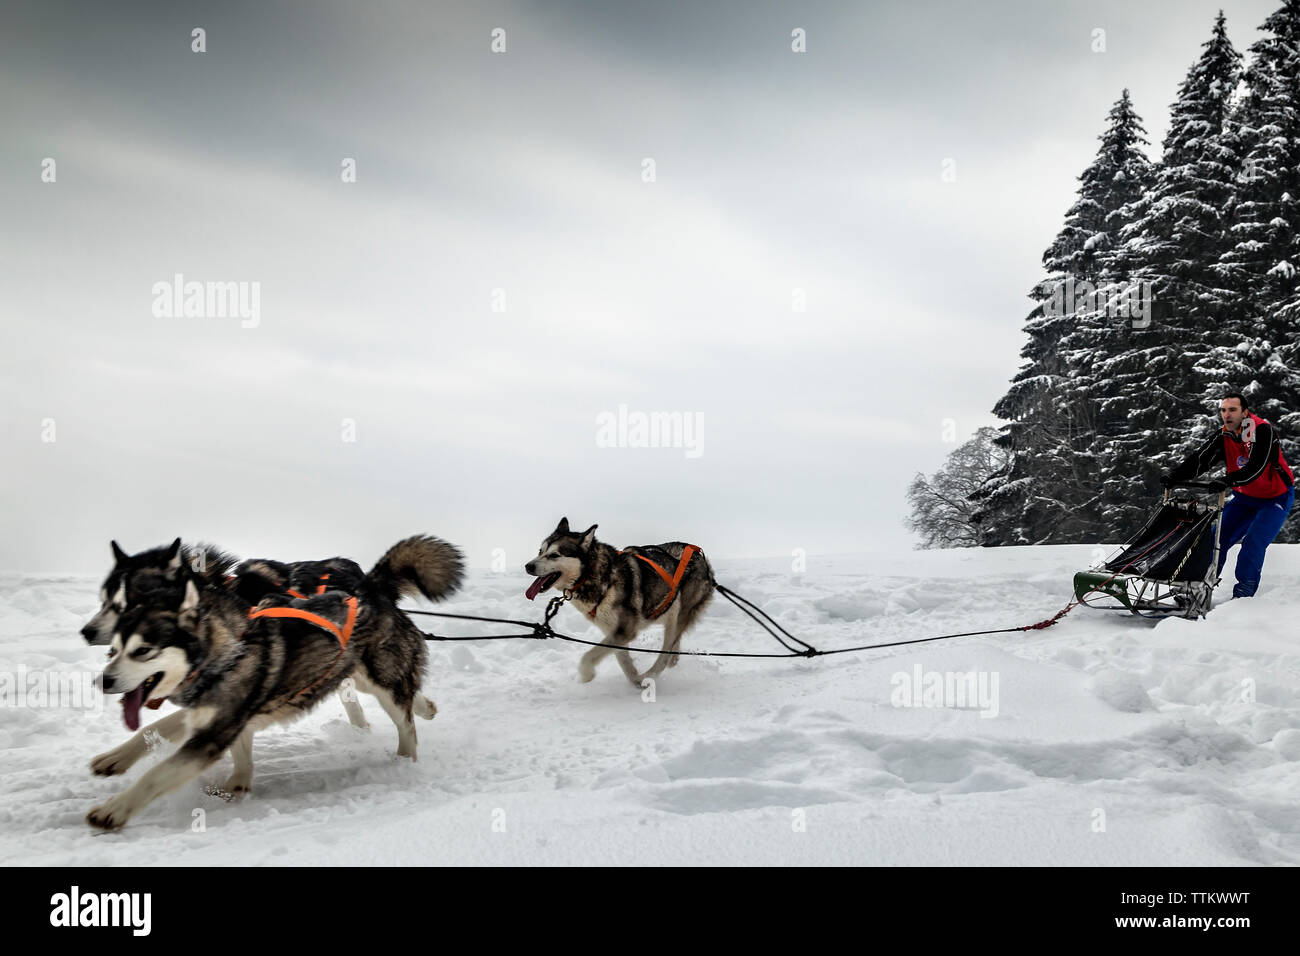 Man dogsledding on snowy field against sky Stock Photo